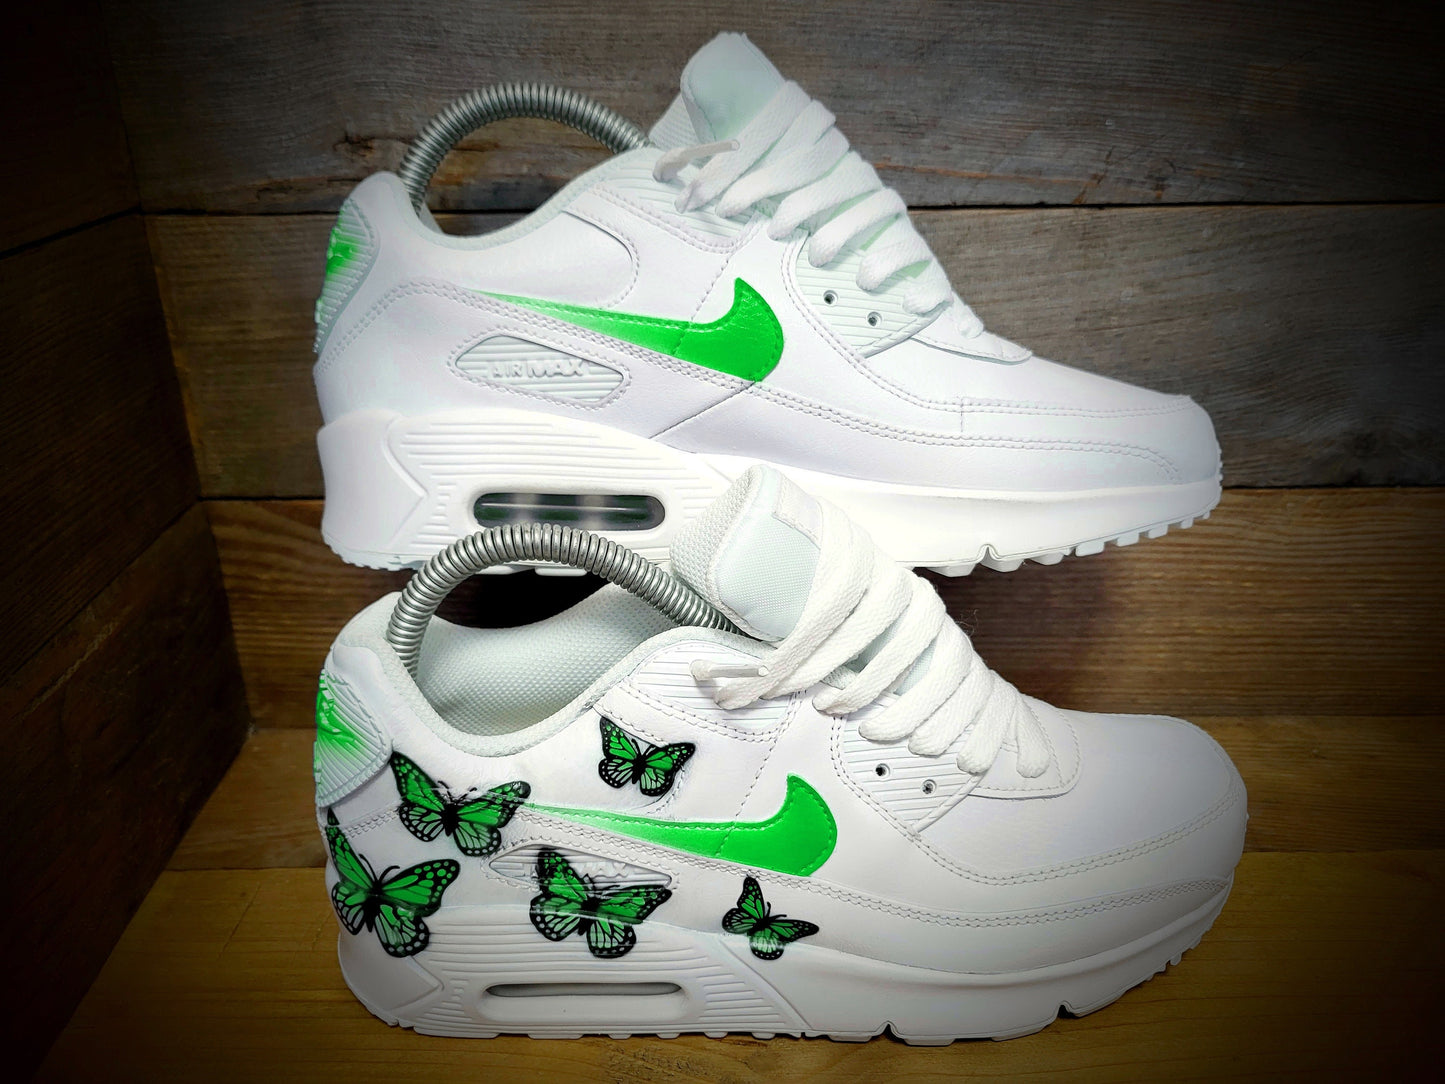 Custom Painted Air Max 90/Sneakers/Shoes/Kicks/Premium/Personalised/Green Butterfly